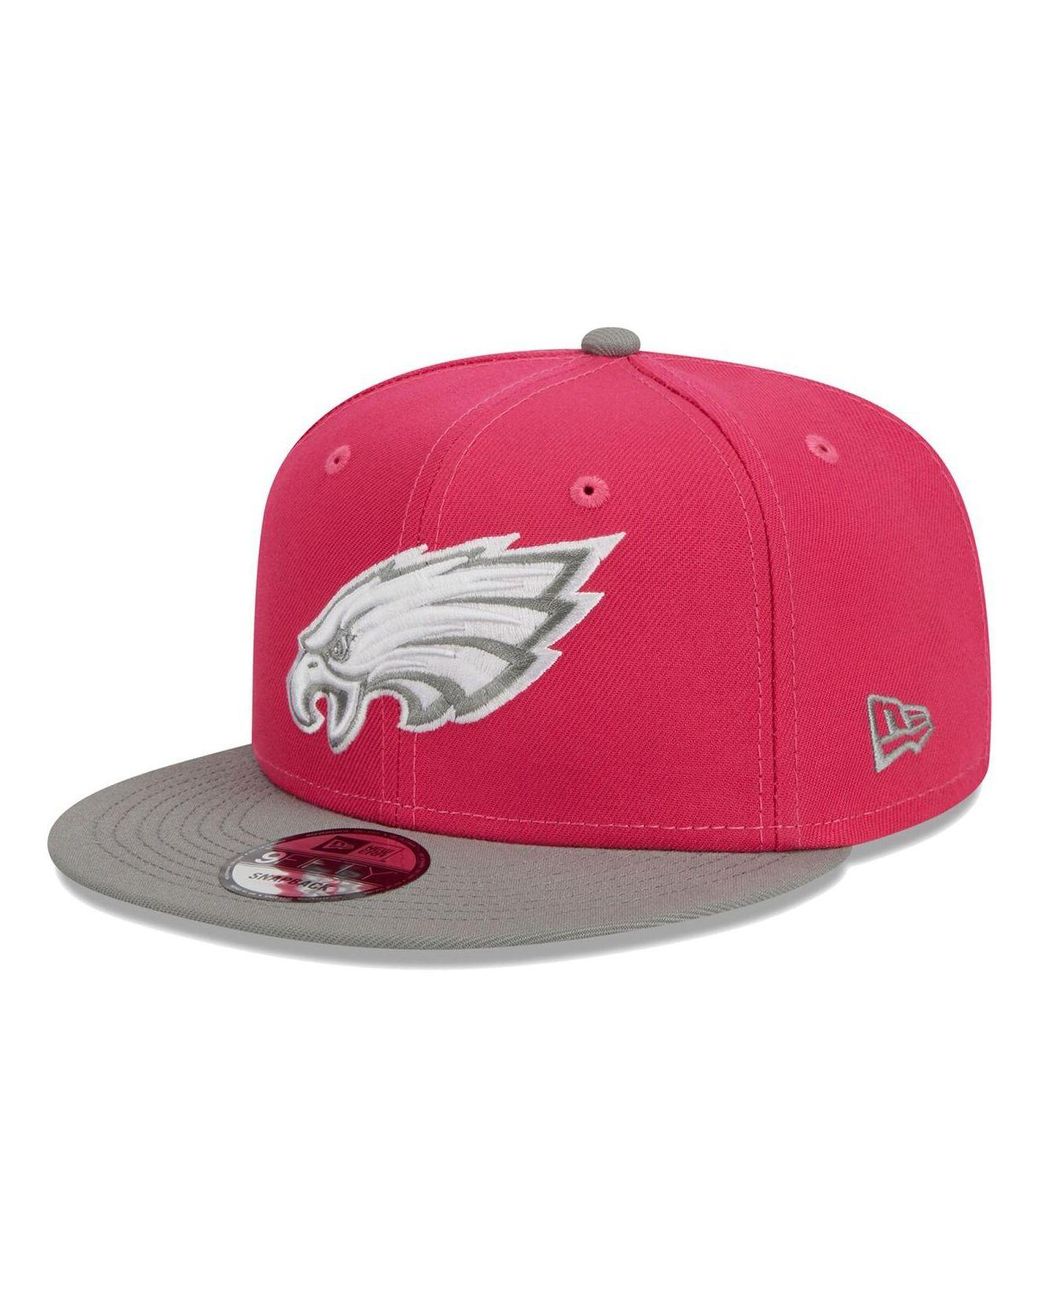 San Francisco 49ers New Era 2-Tone Color Pack 9FIFTY Snapback Hat